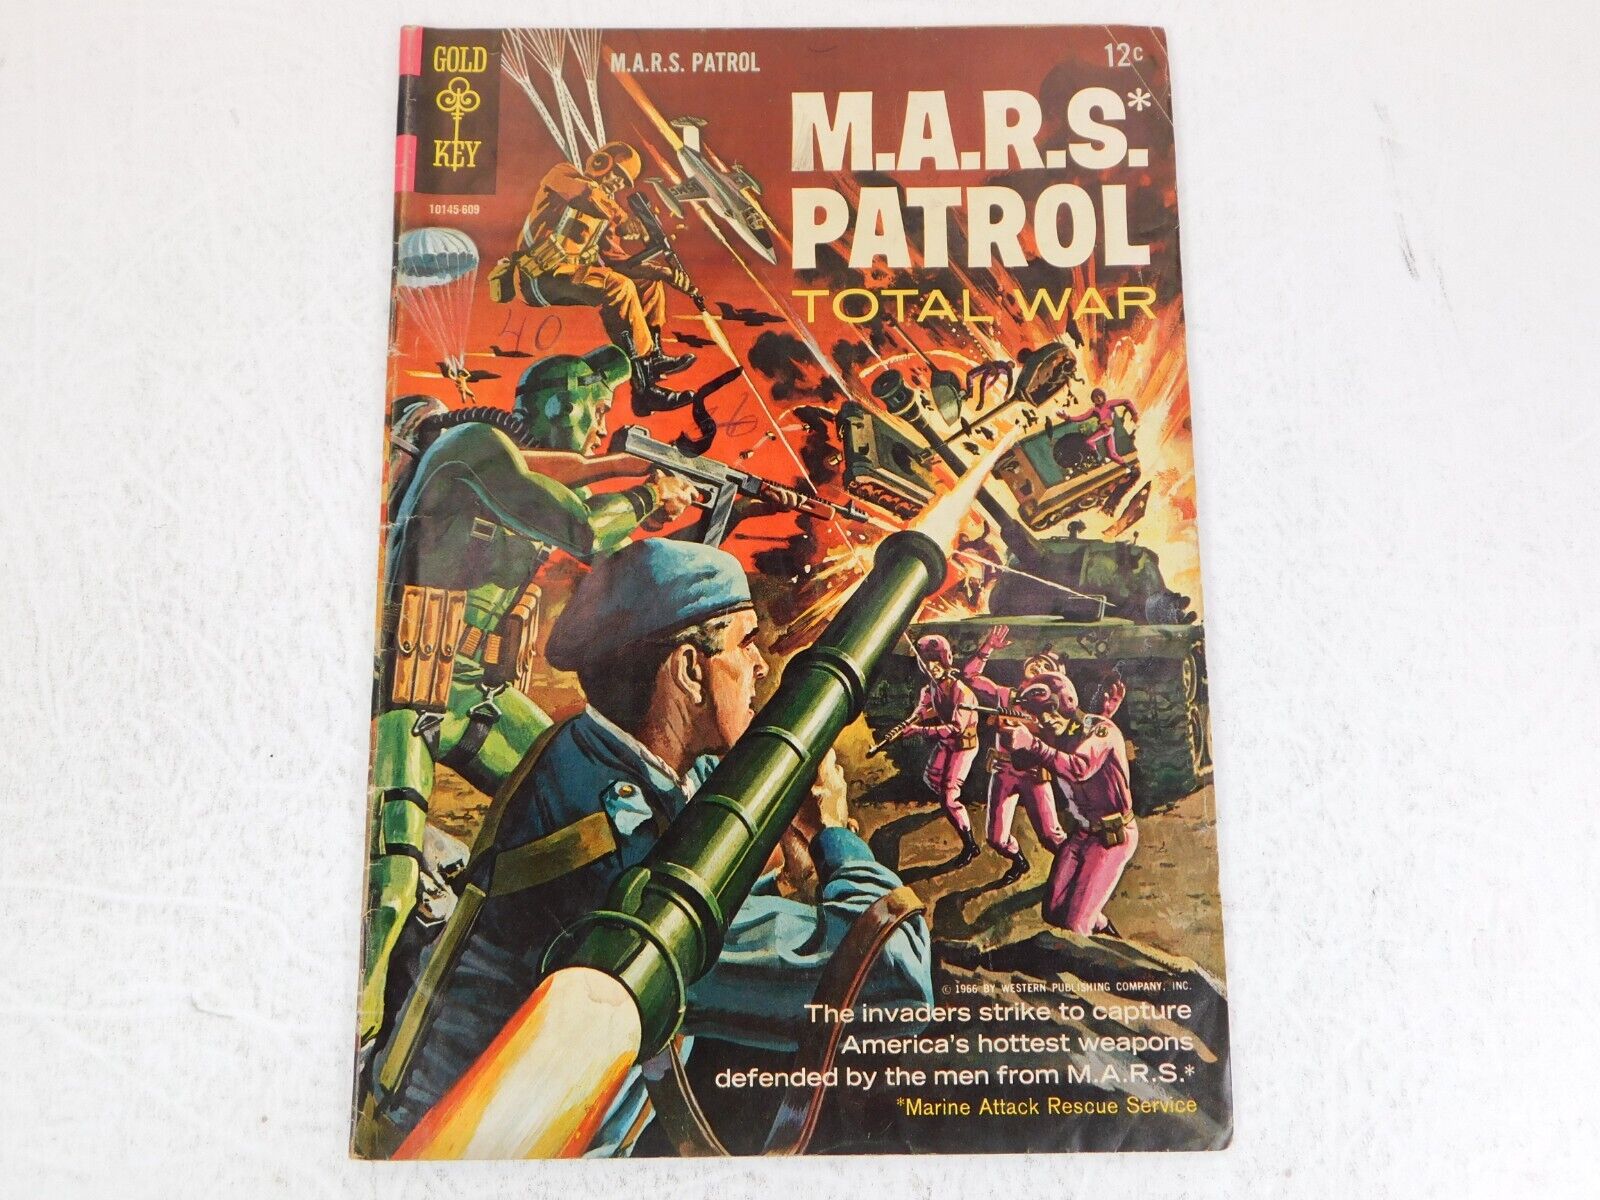 MARS PATROL TOTAL WAR # 3 VG Silver Age Comic (Gold Key 1966)